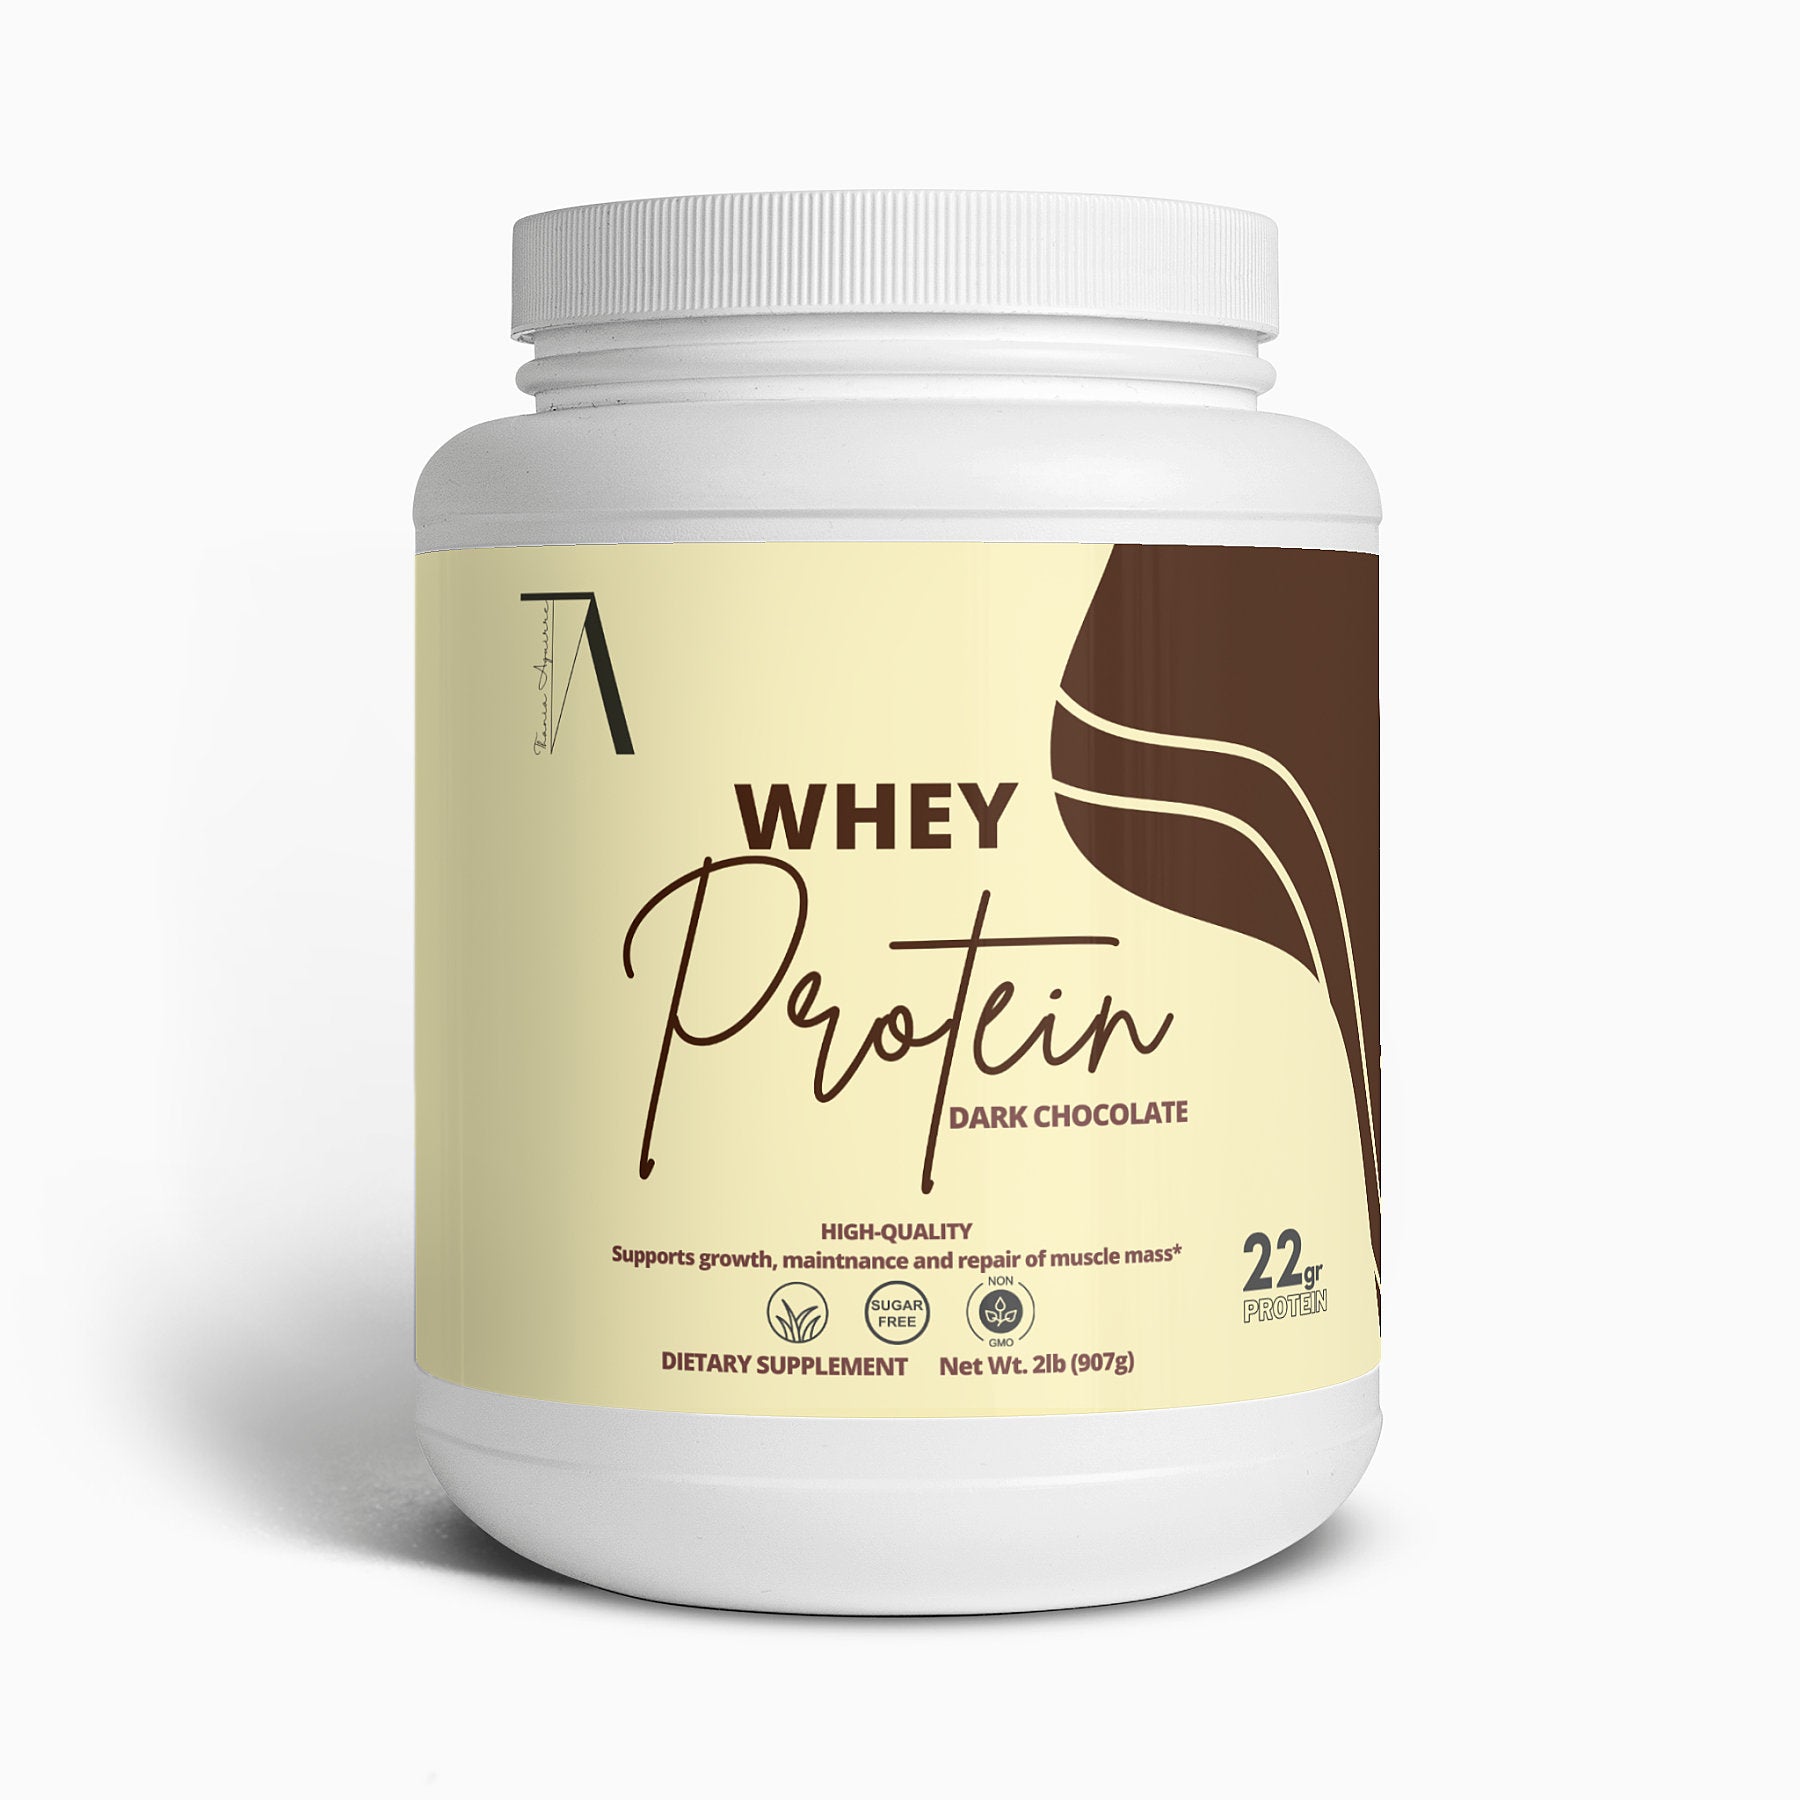 Whey Protein (Dark Chocolate)